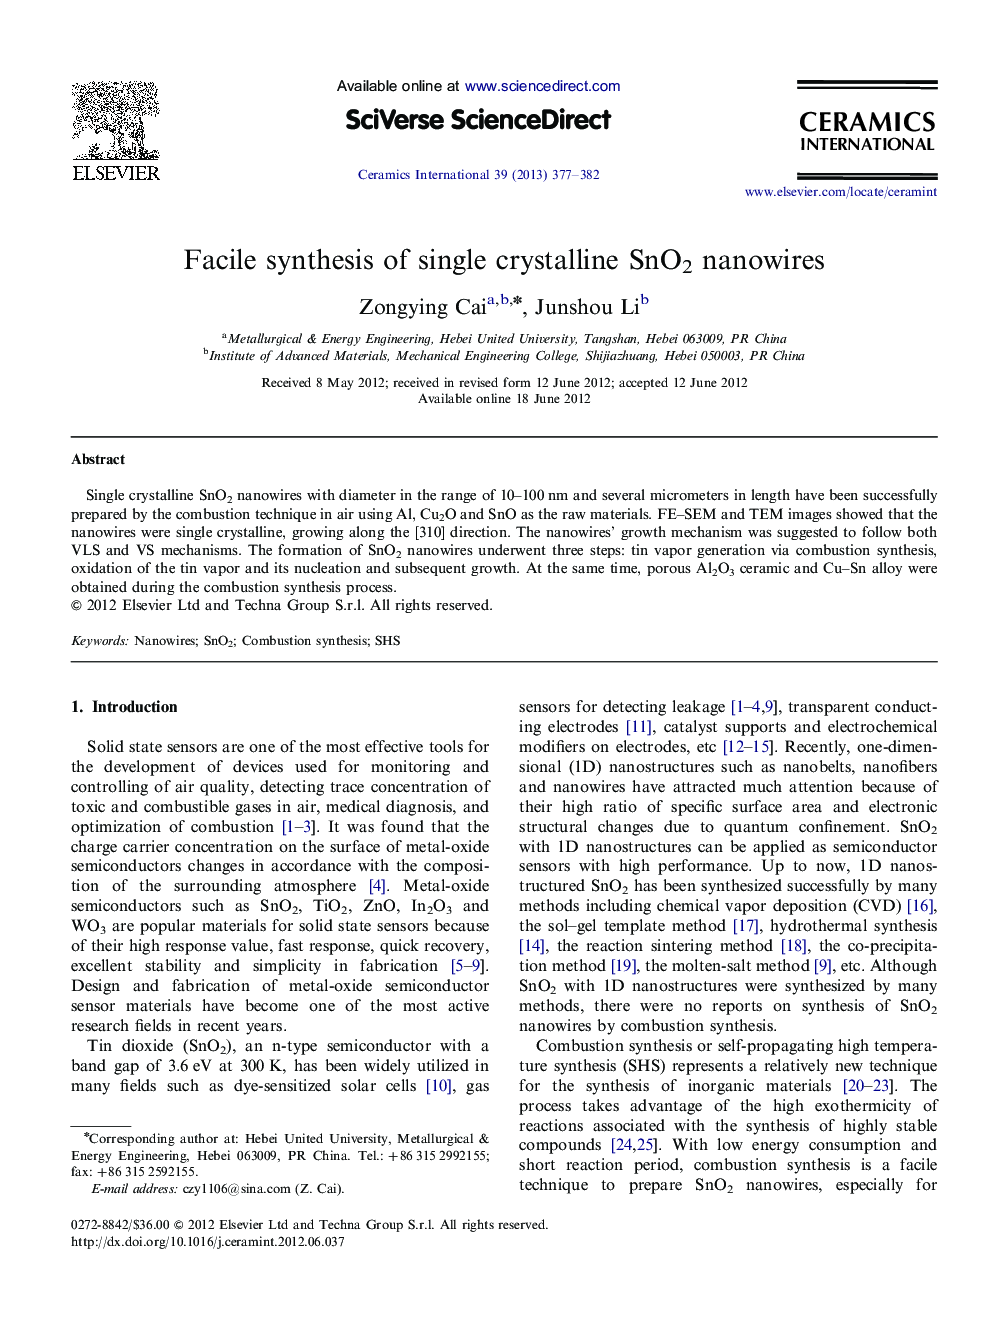 Facile synthesis of single crystalline SnO2 nanowires